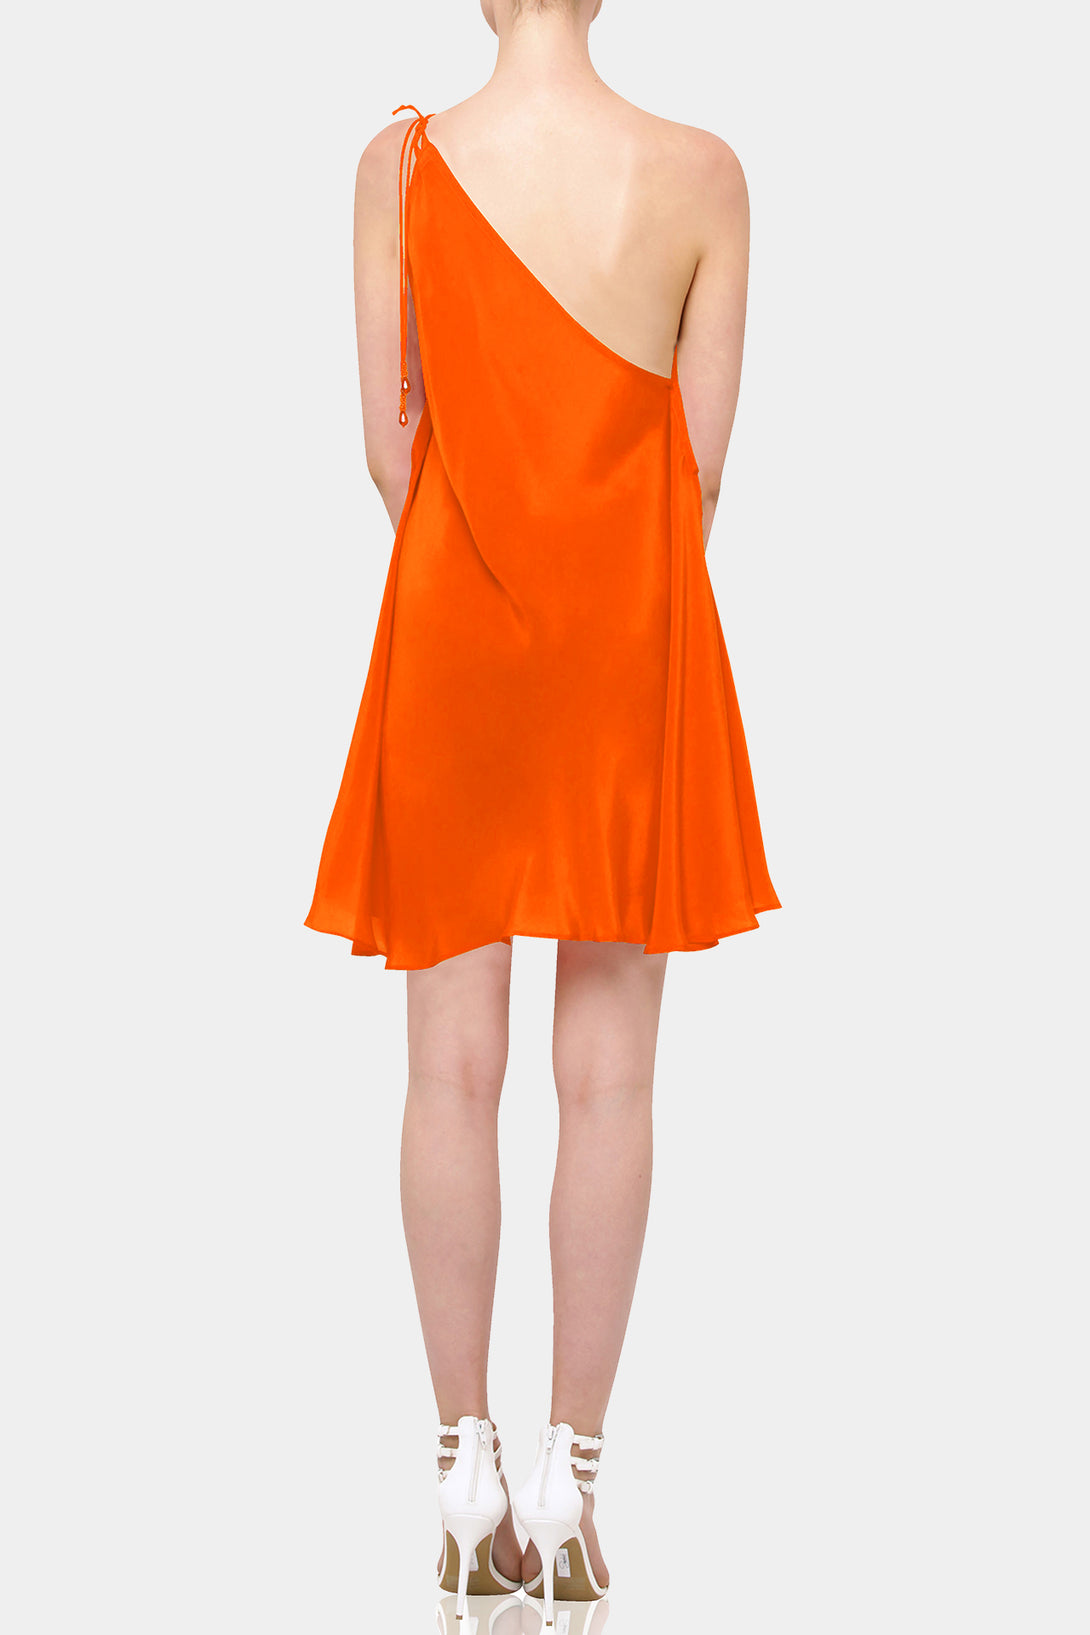  orange satin mini dress, casual mini dress, Shahida Parides, cute short dresses,